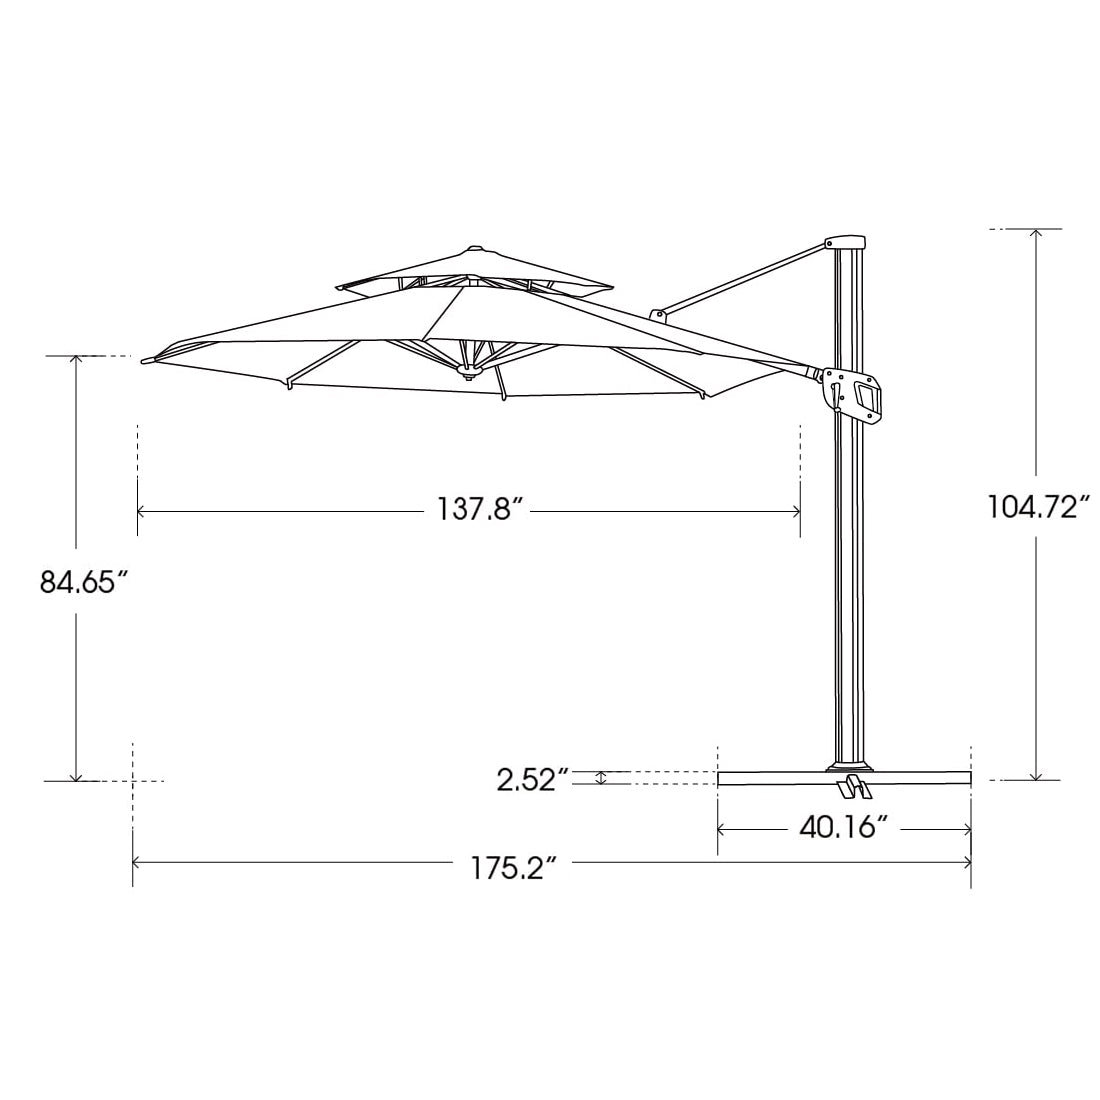 Bluu Redwood Pro Cantilever Umbrella Round 2-Tier